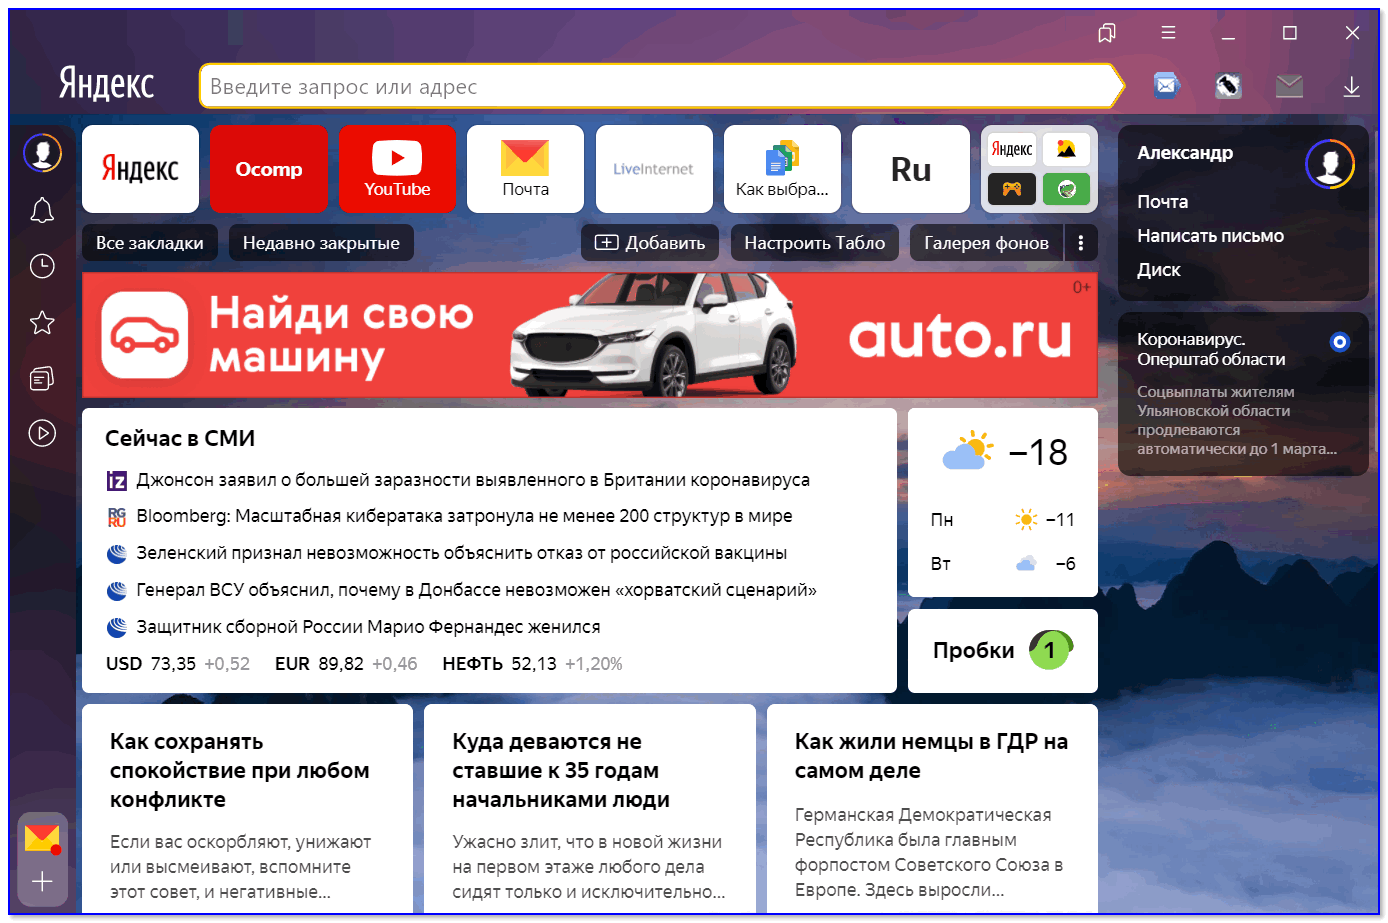 Яндекс-браузер — главная страничка